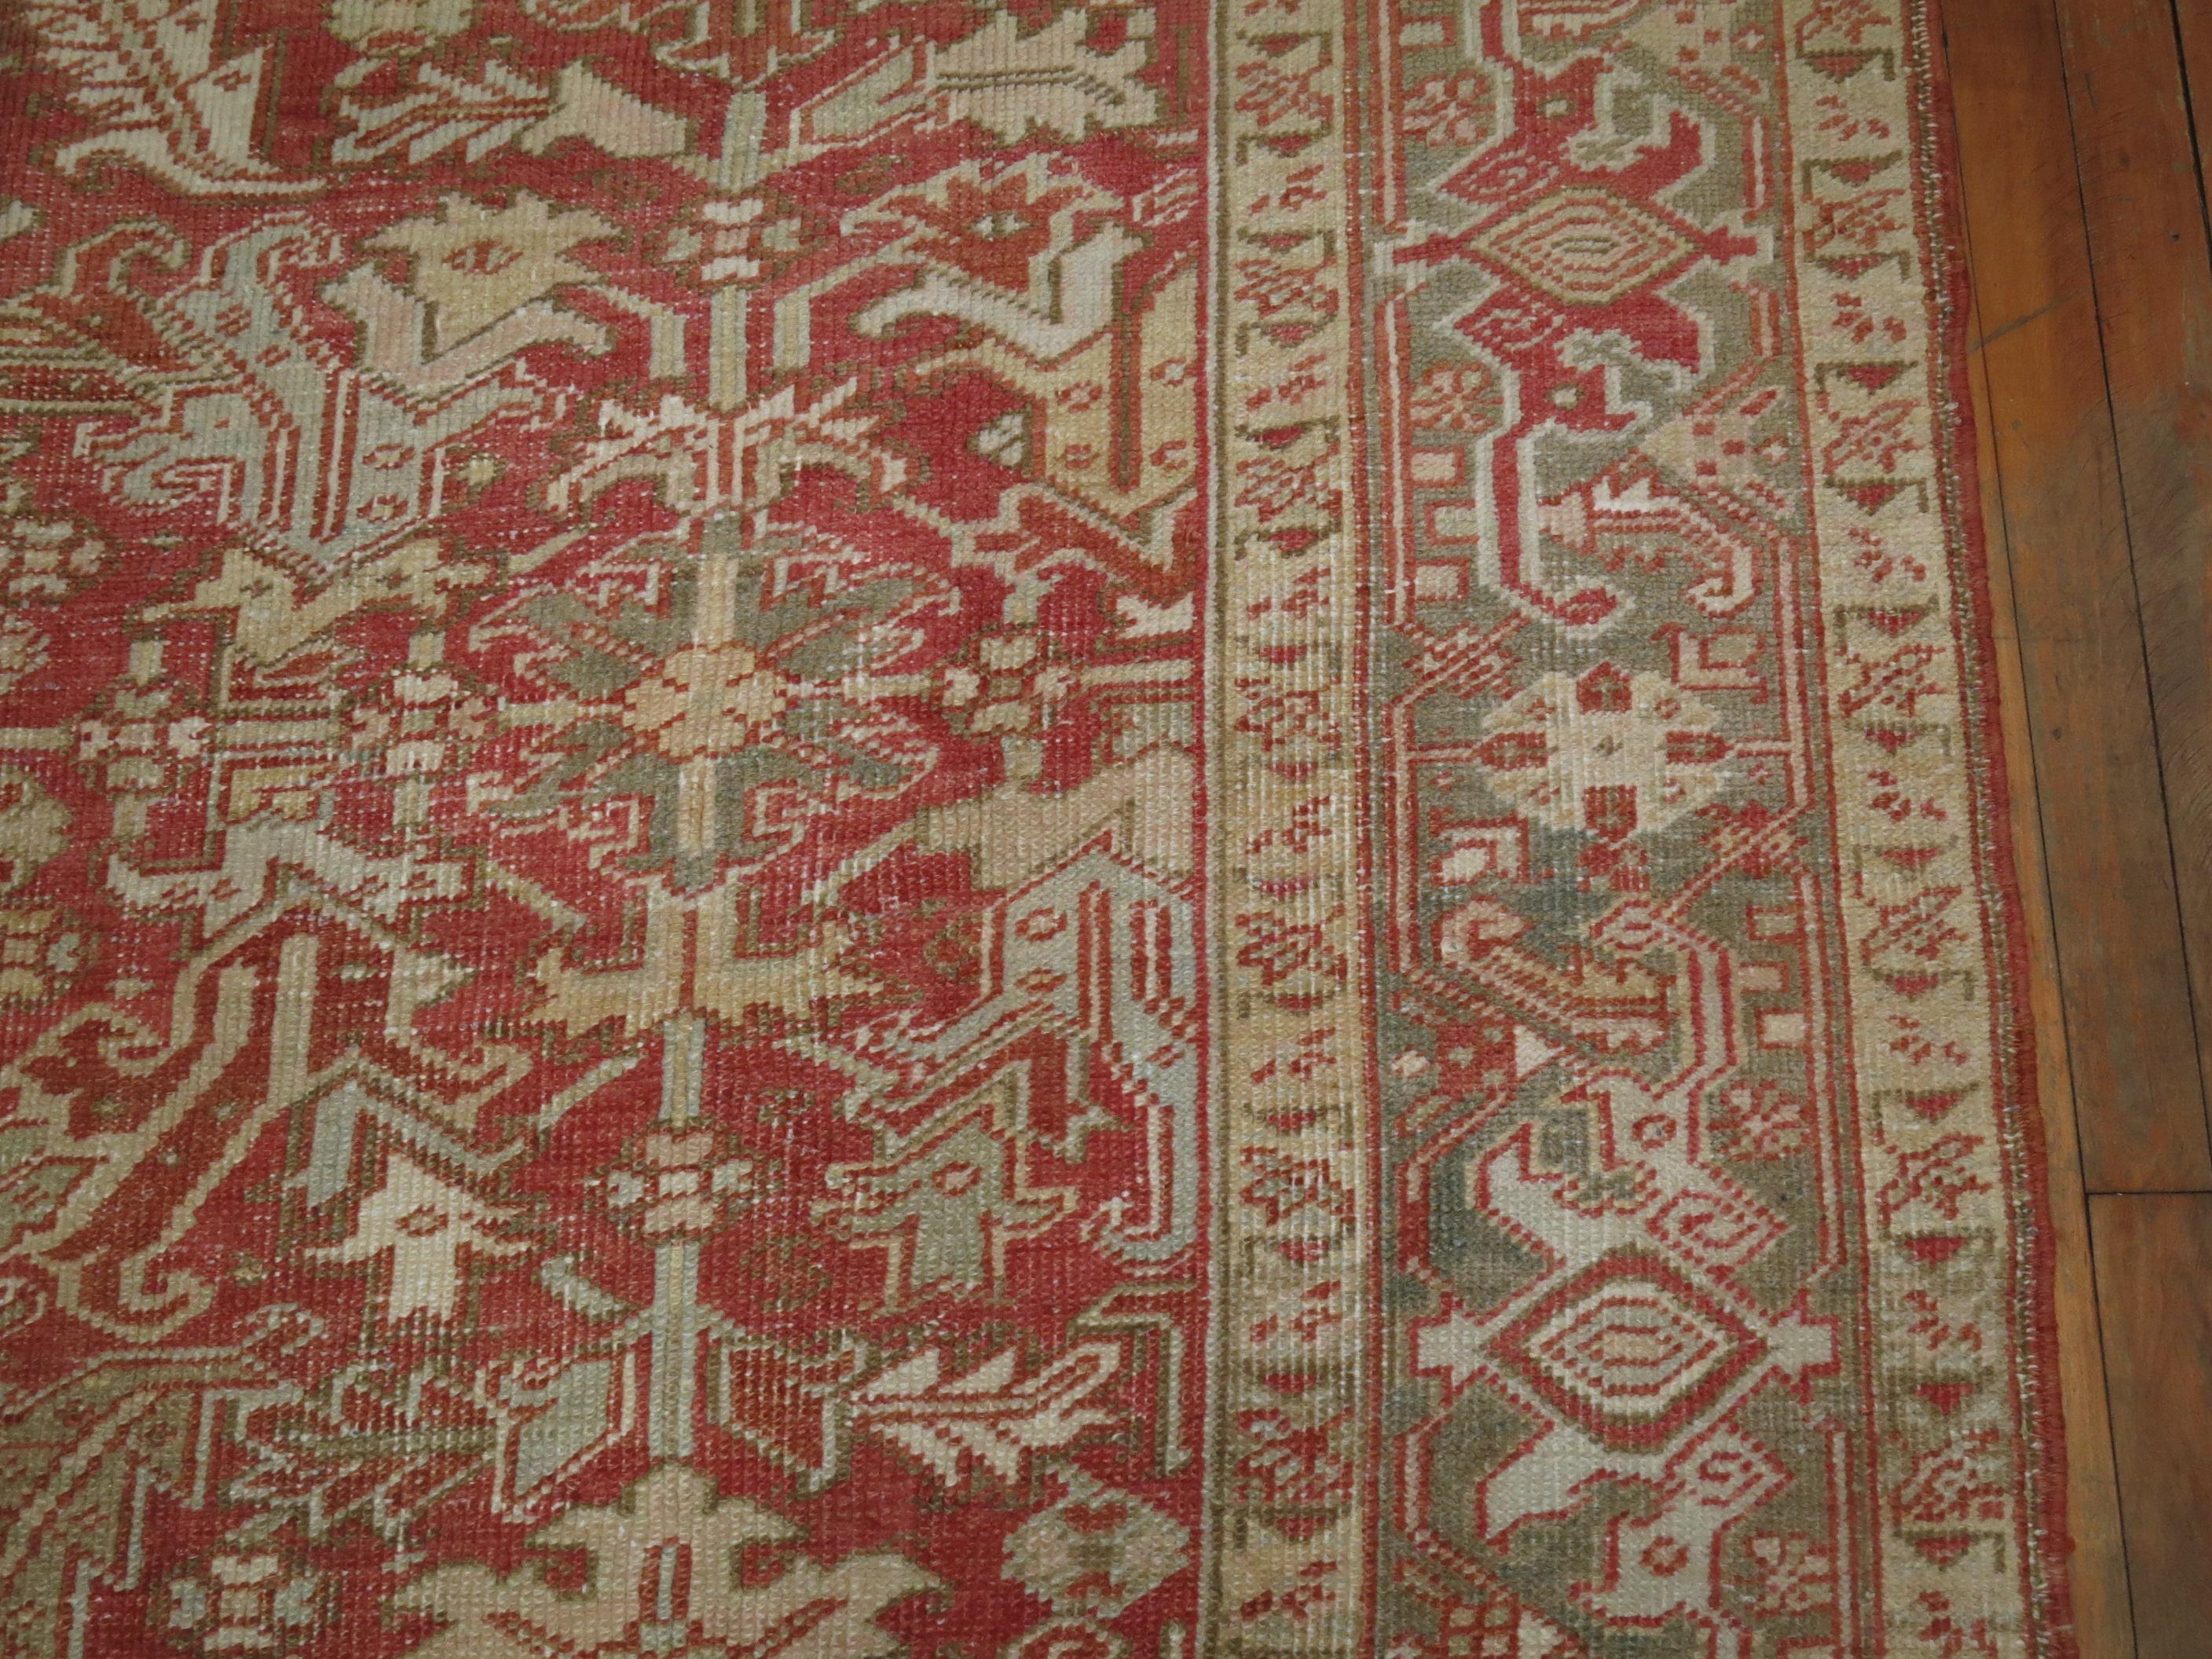 Hand-Woven Birmingham Brick Red Color Persian Heriz Oriental Antique Room Carpet For Sale